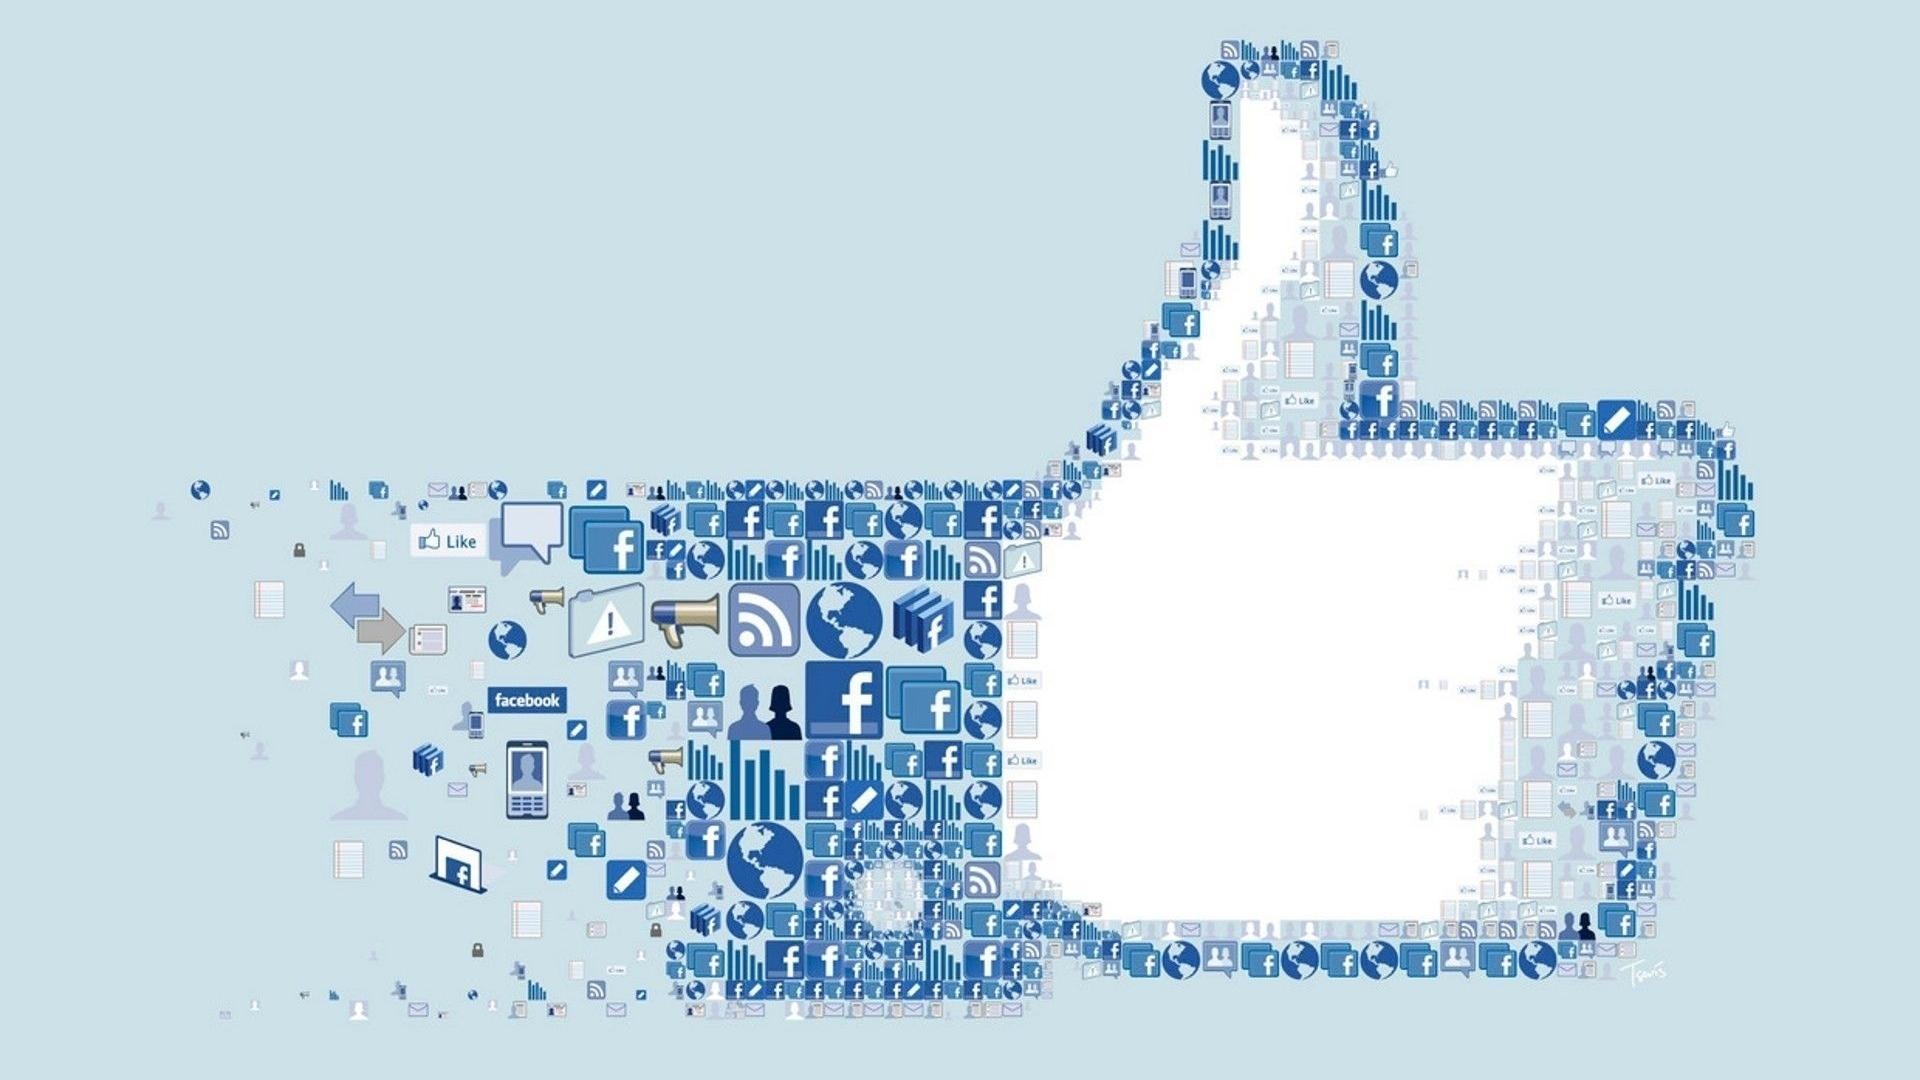 Facebook: An online social media and social networking service, Andrew McCollum. 1920x1080 Full HD Wallpaper.